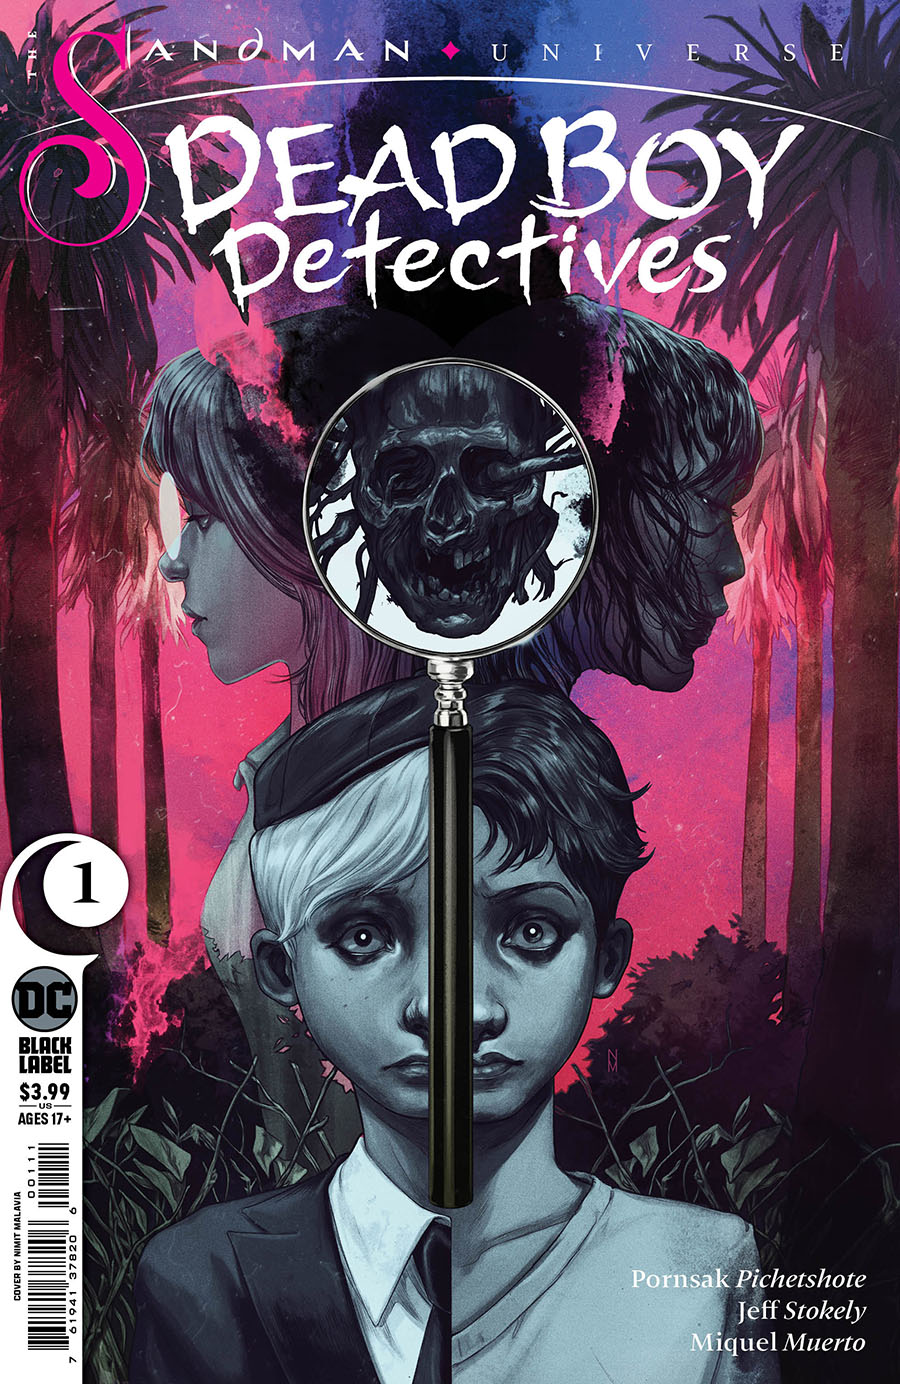 Sandman Universe Dead Boy Detectives #1 Cover A Regular Nimit Malavia Cover